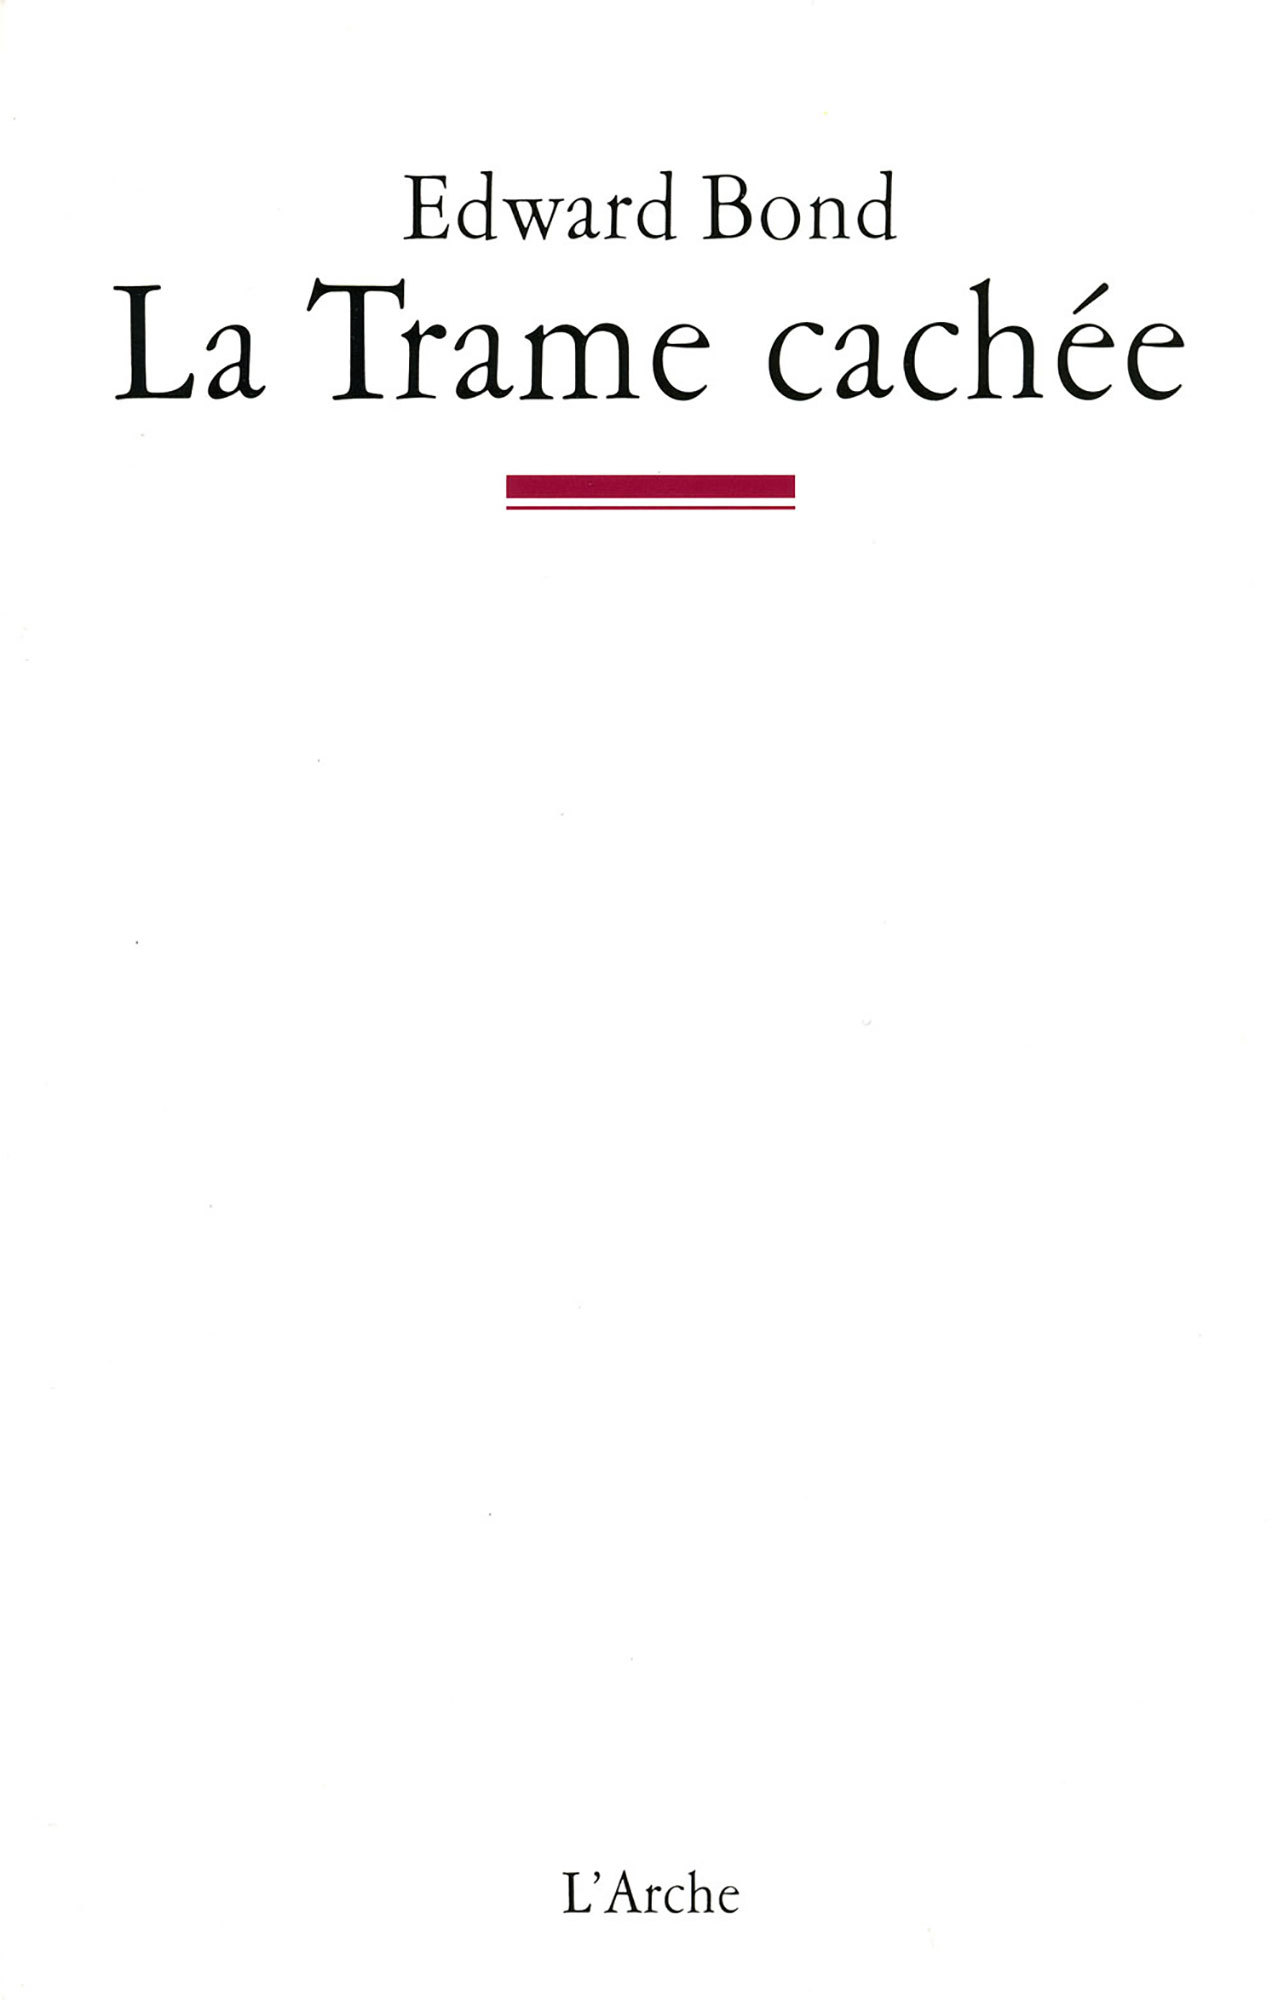 La Trame cachée (9782851815477-front-cover)